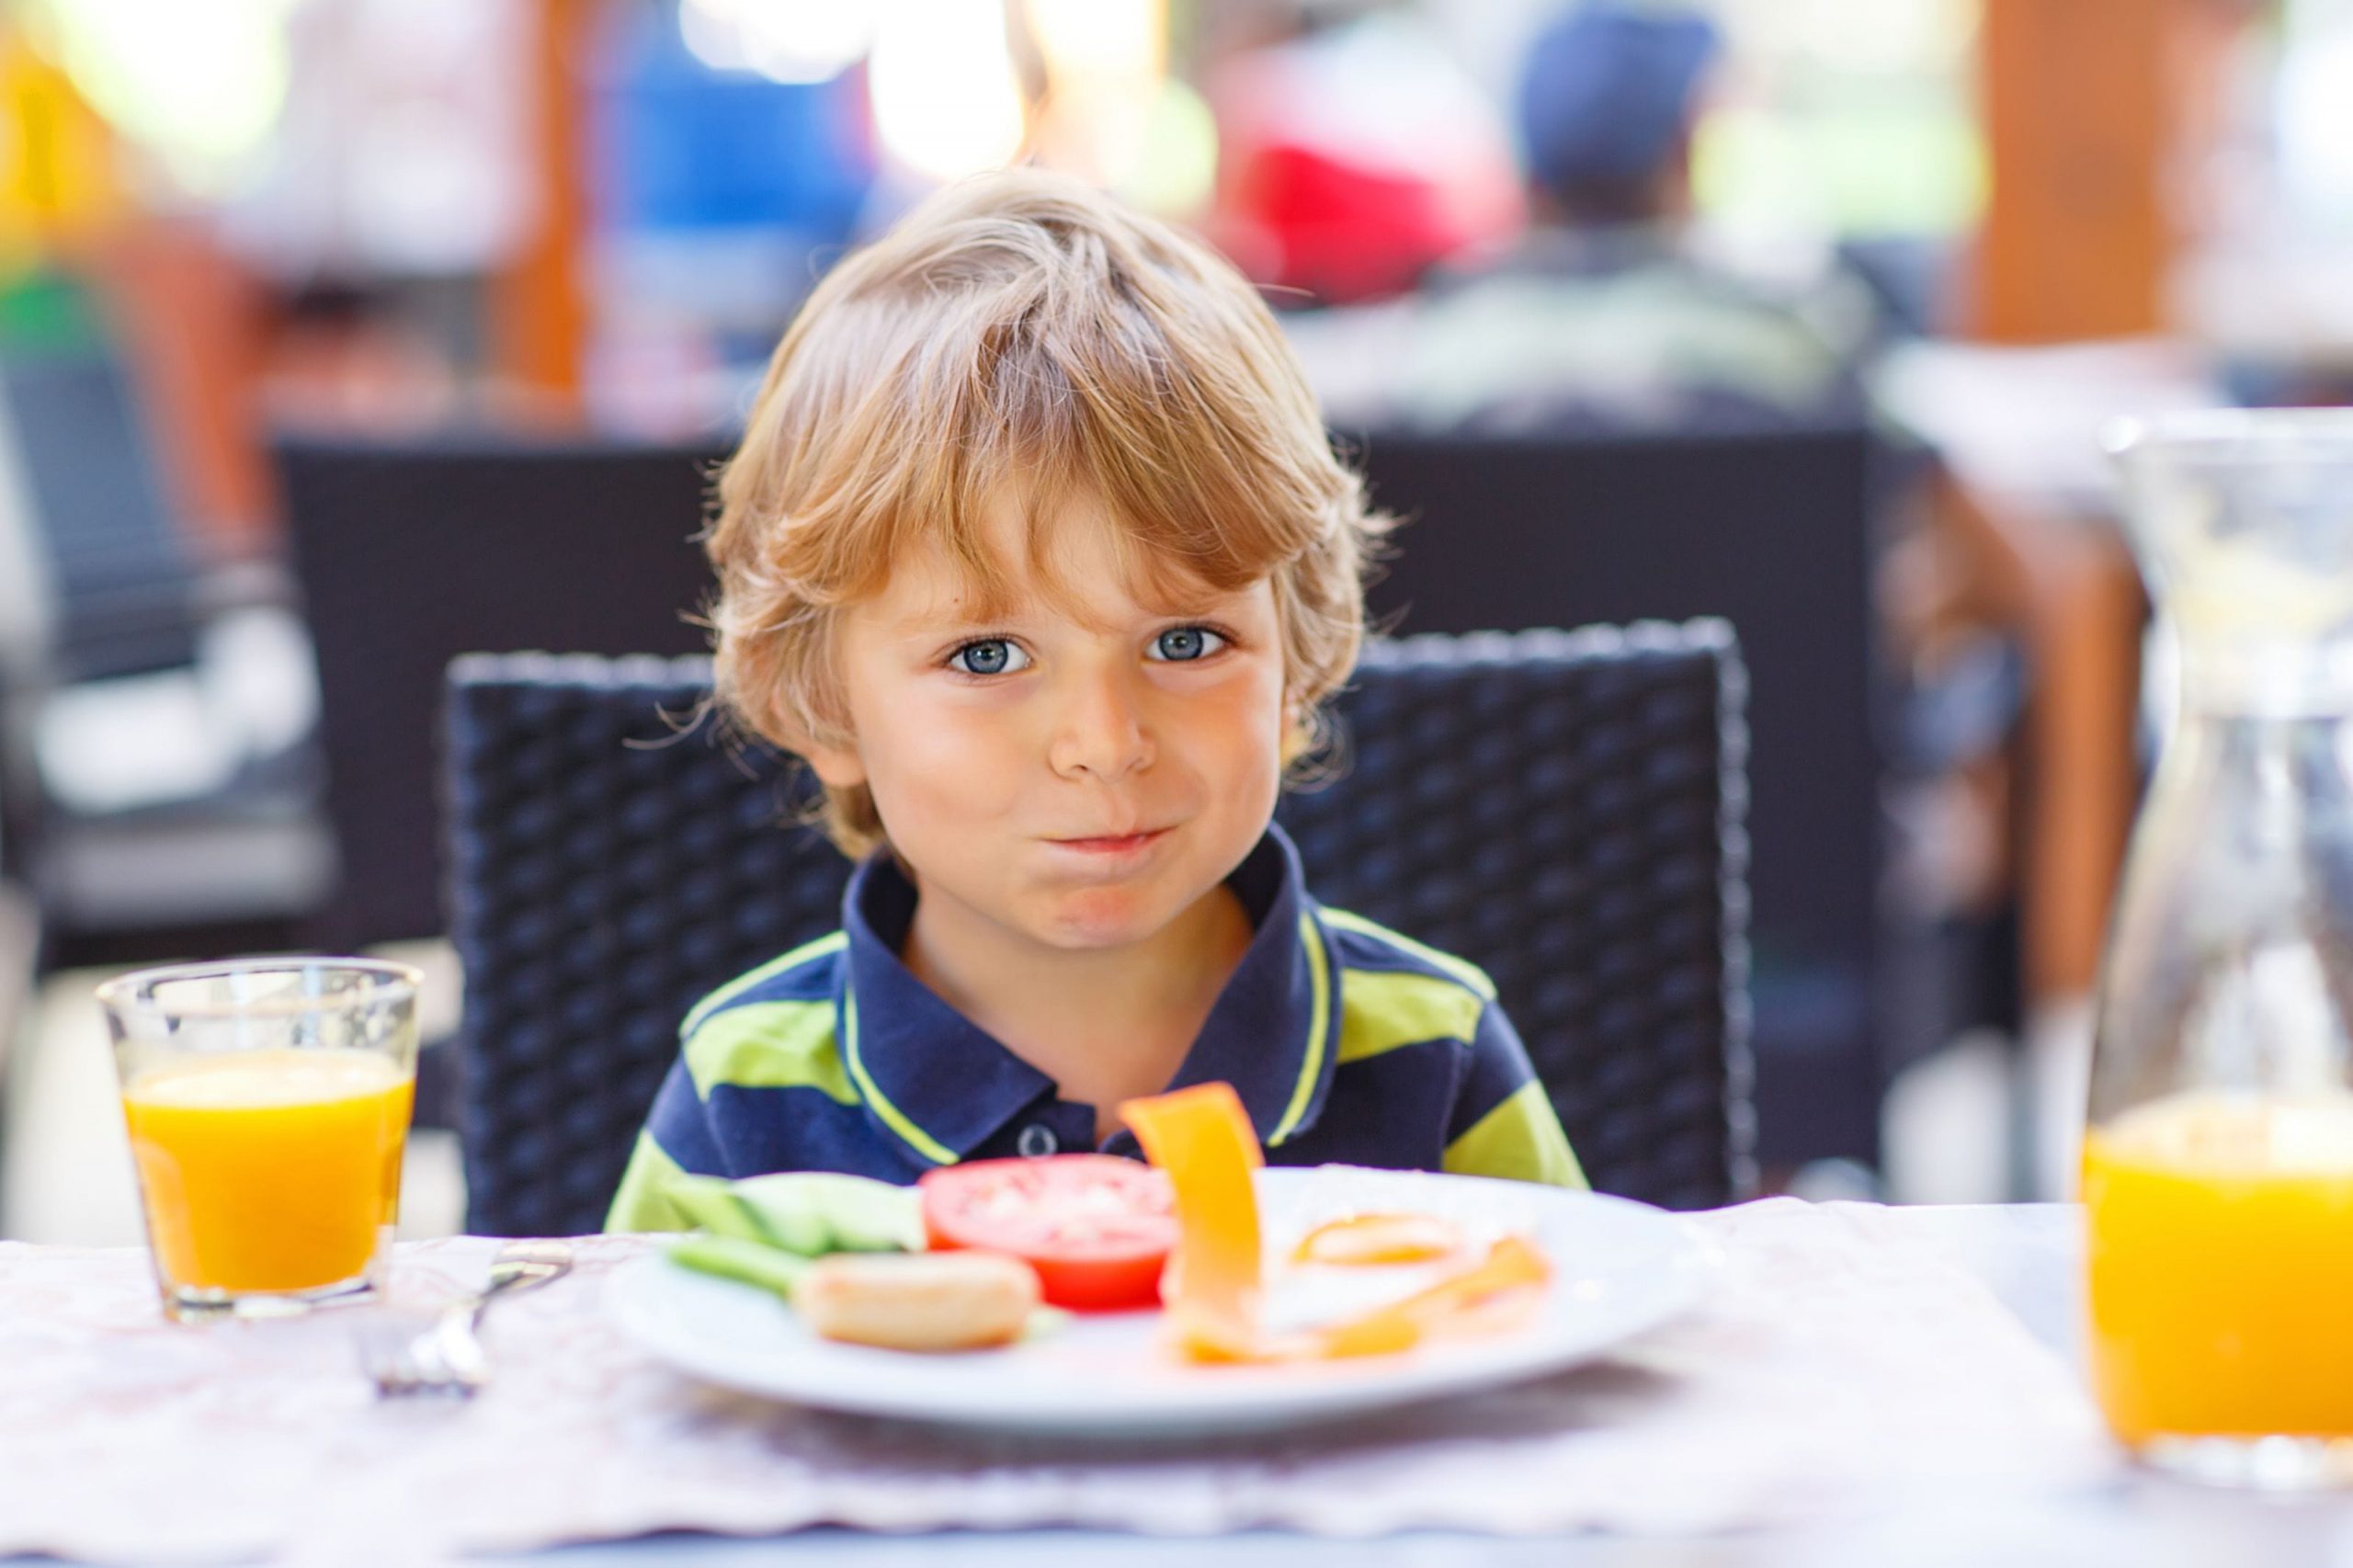 Little boy eating in a restaurant